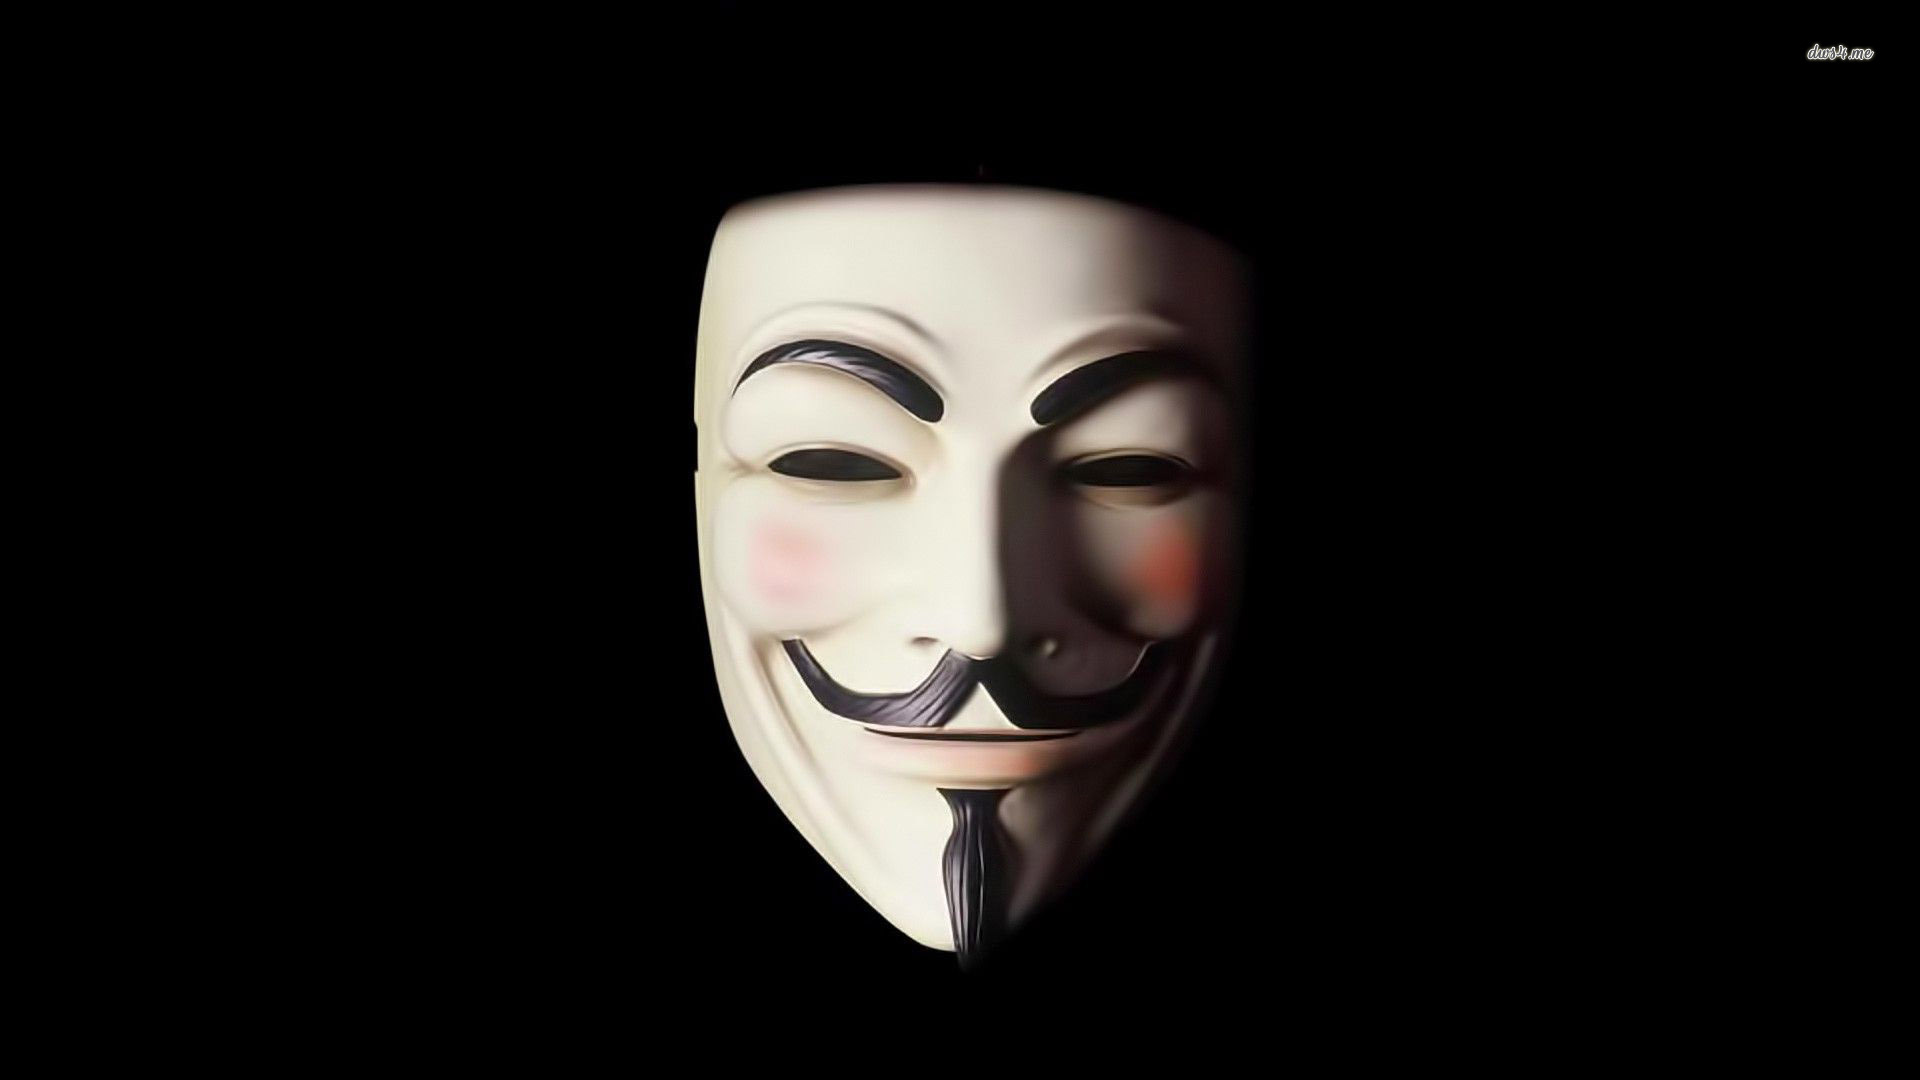 Anonymous mask wallpaper